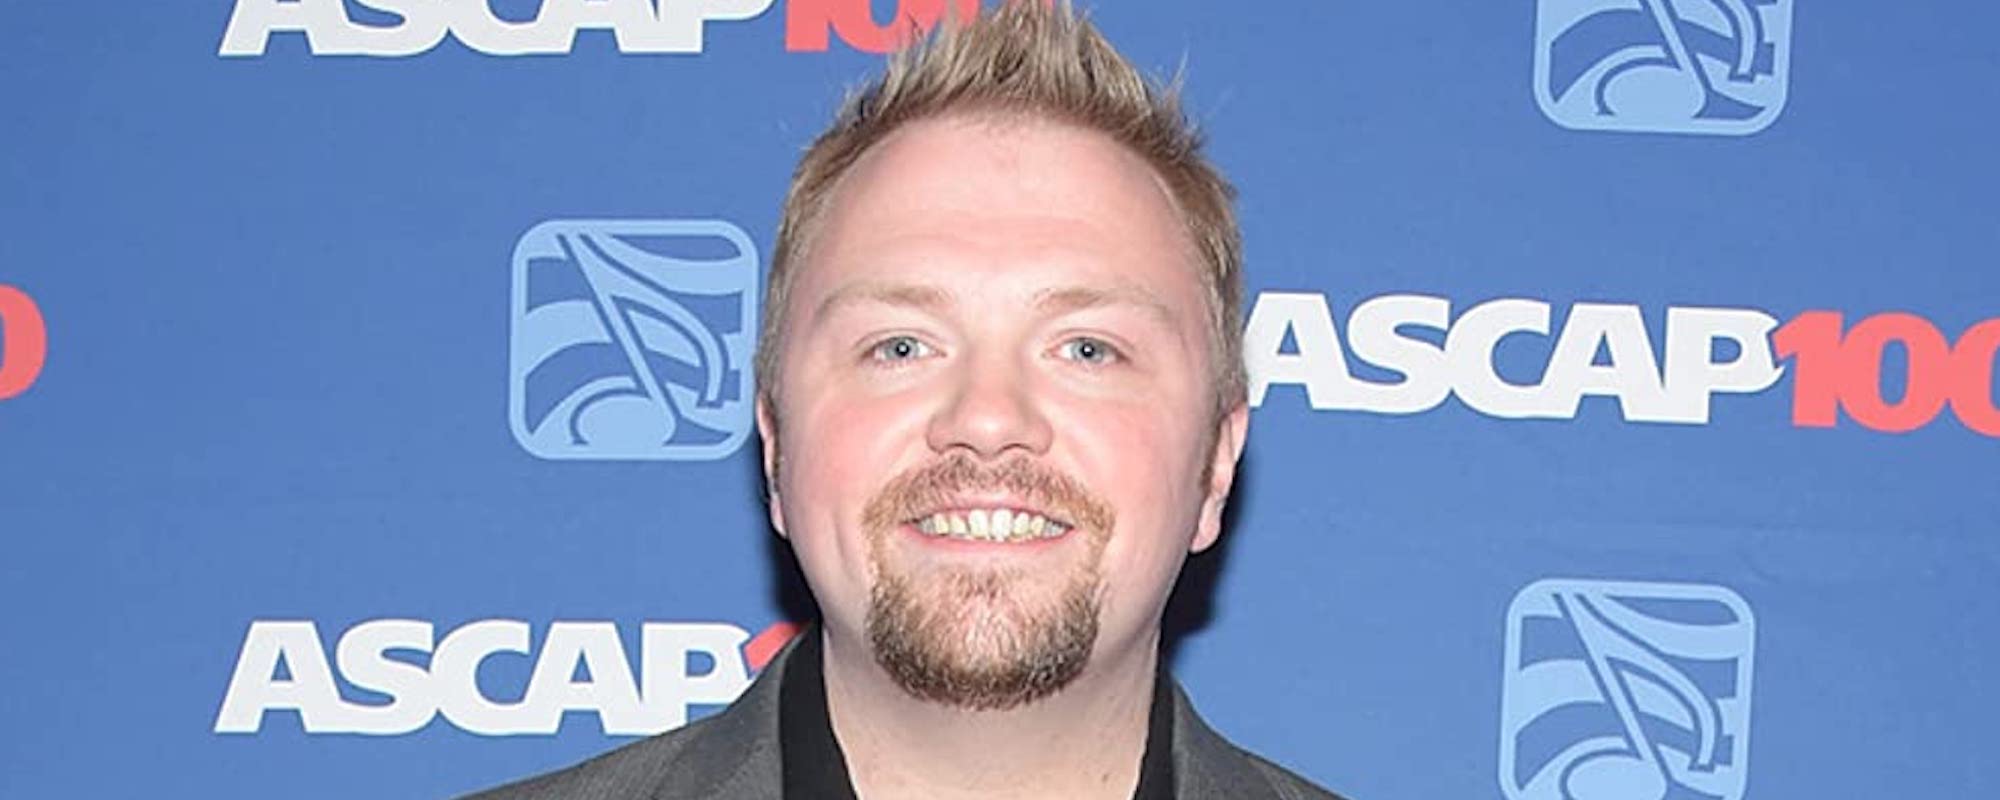 Josh Osborne Named ASCAP Songwriter of the Year